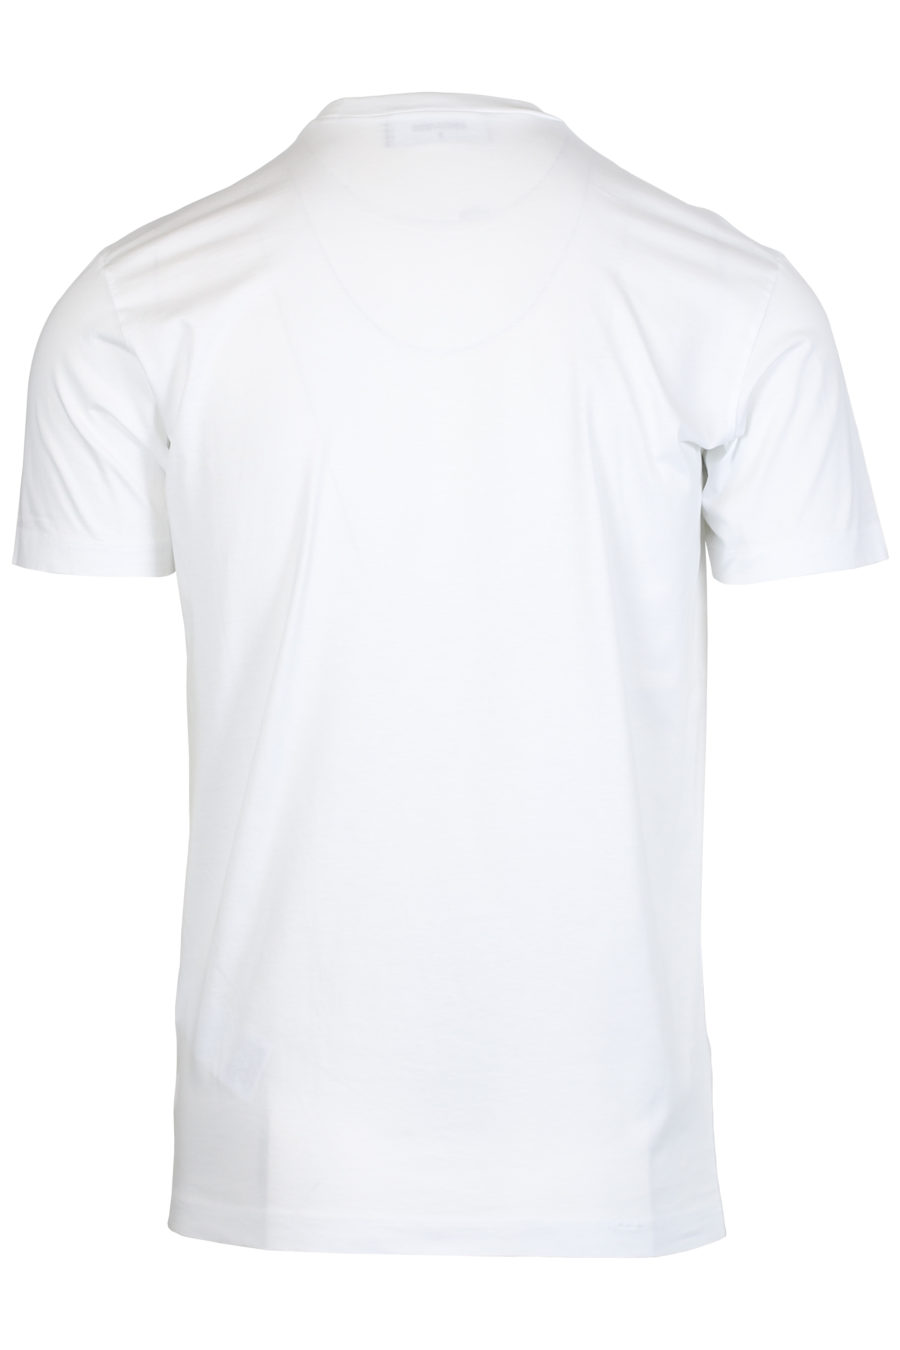 T-shirt blanc avec petit logo "Ceresio 9" - IMG 2433